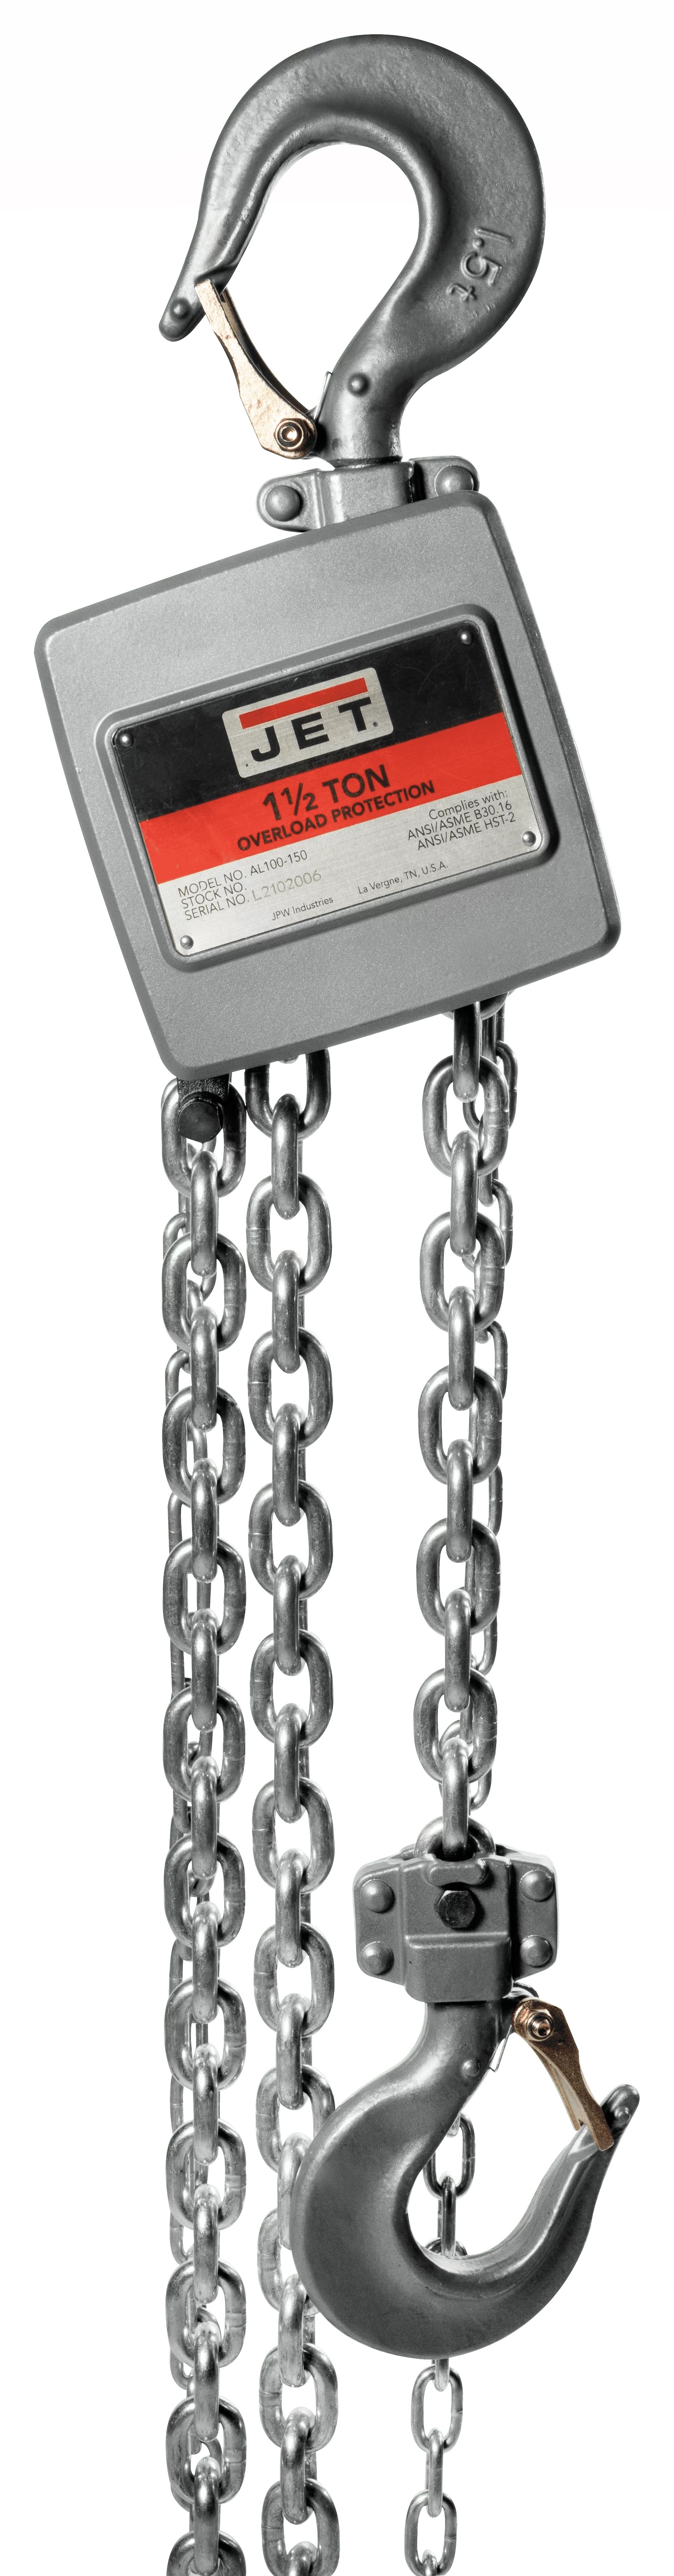 AL100-150-10 1-1/2 Ton Aluminum Hand Chain Hoist with 10ft of Lift